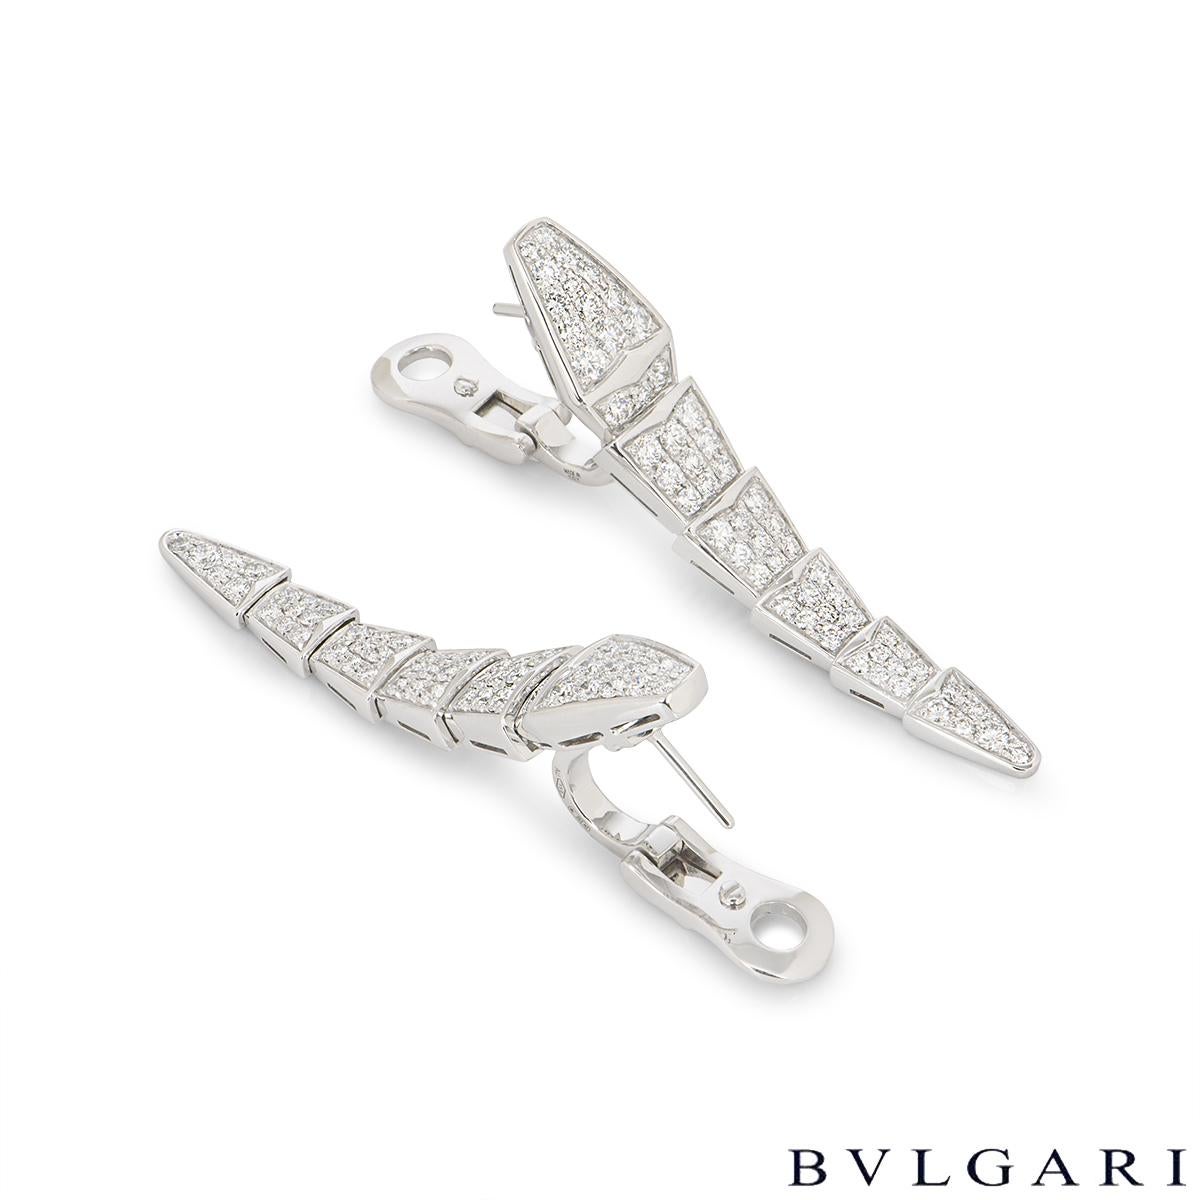 bvlgari serpenti earrings price